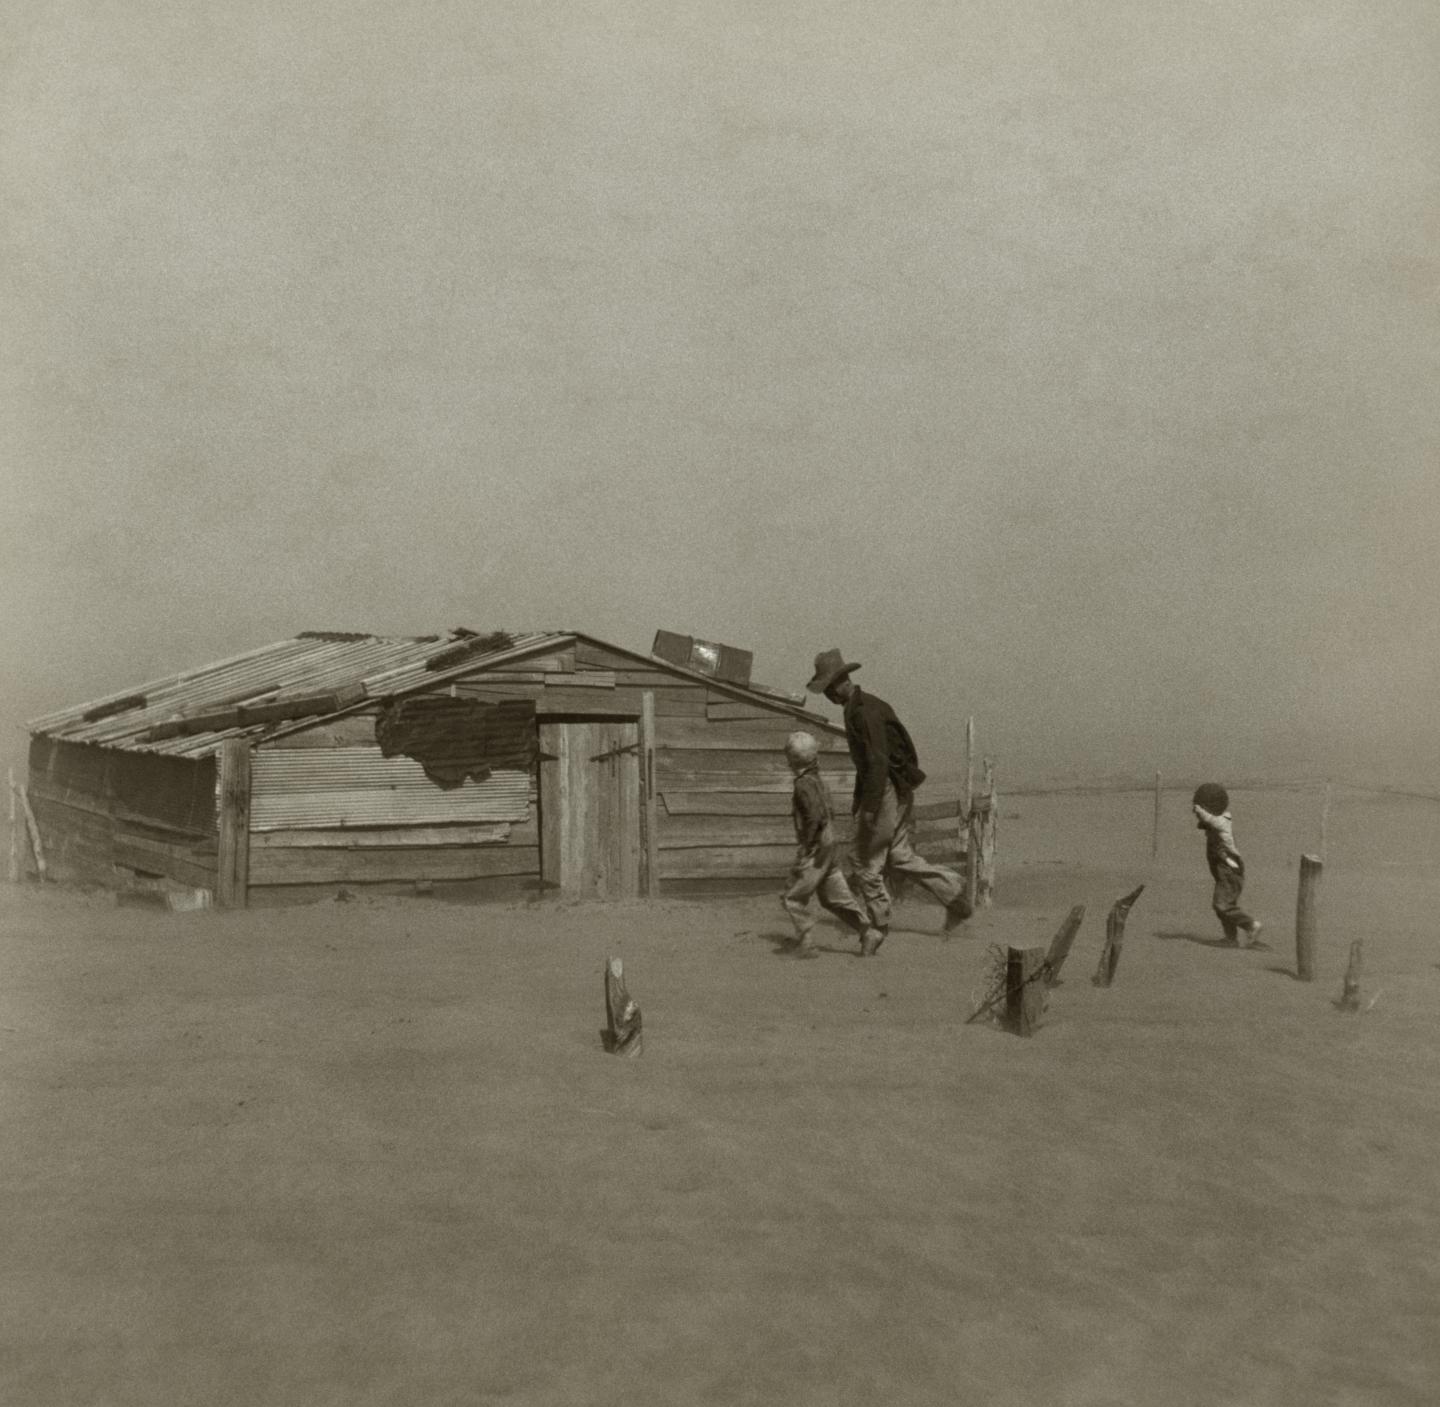 A Dust Storm in Cimarron County, Oklahoma, 1936